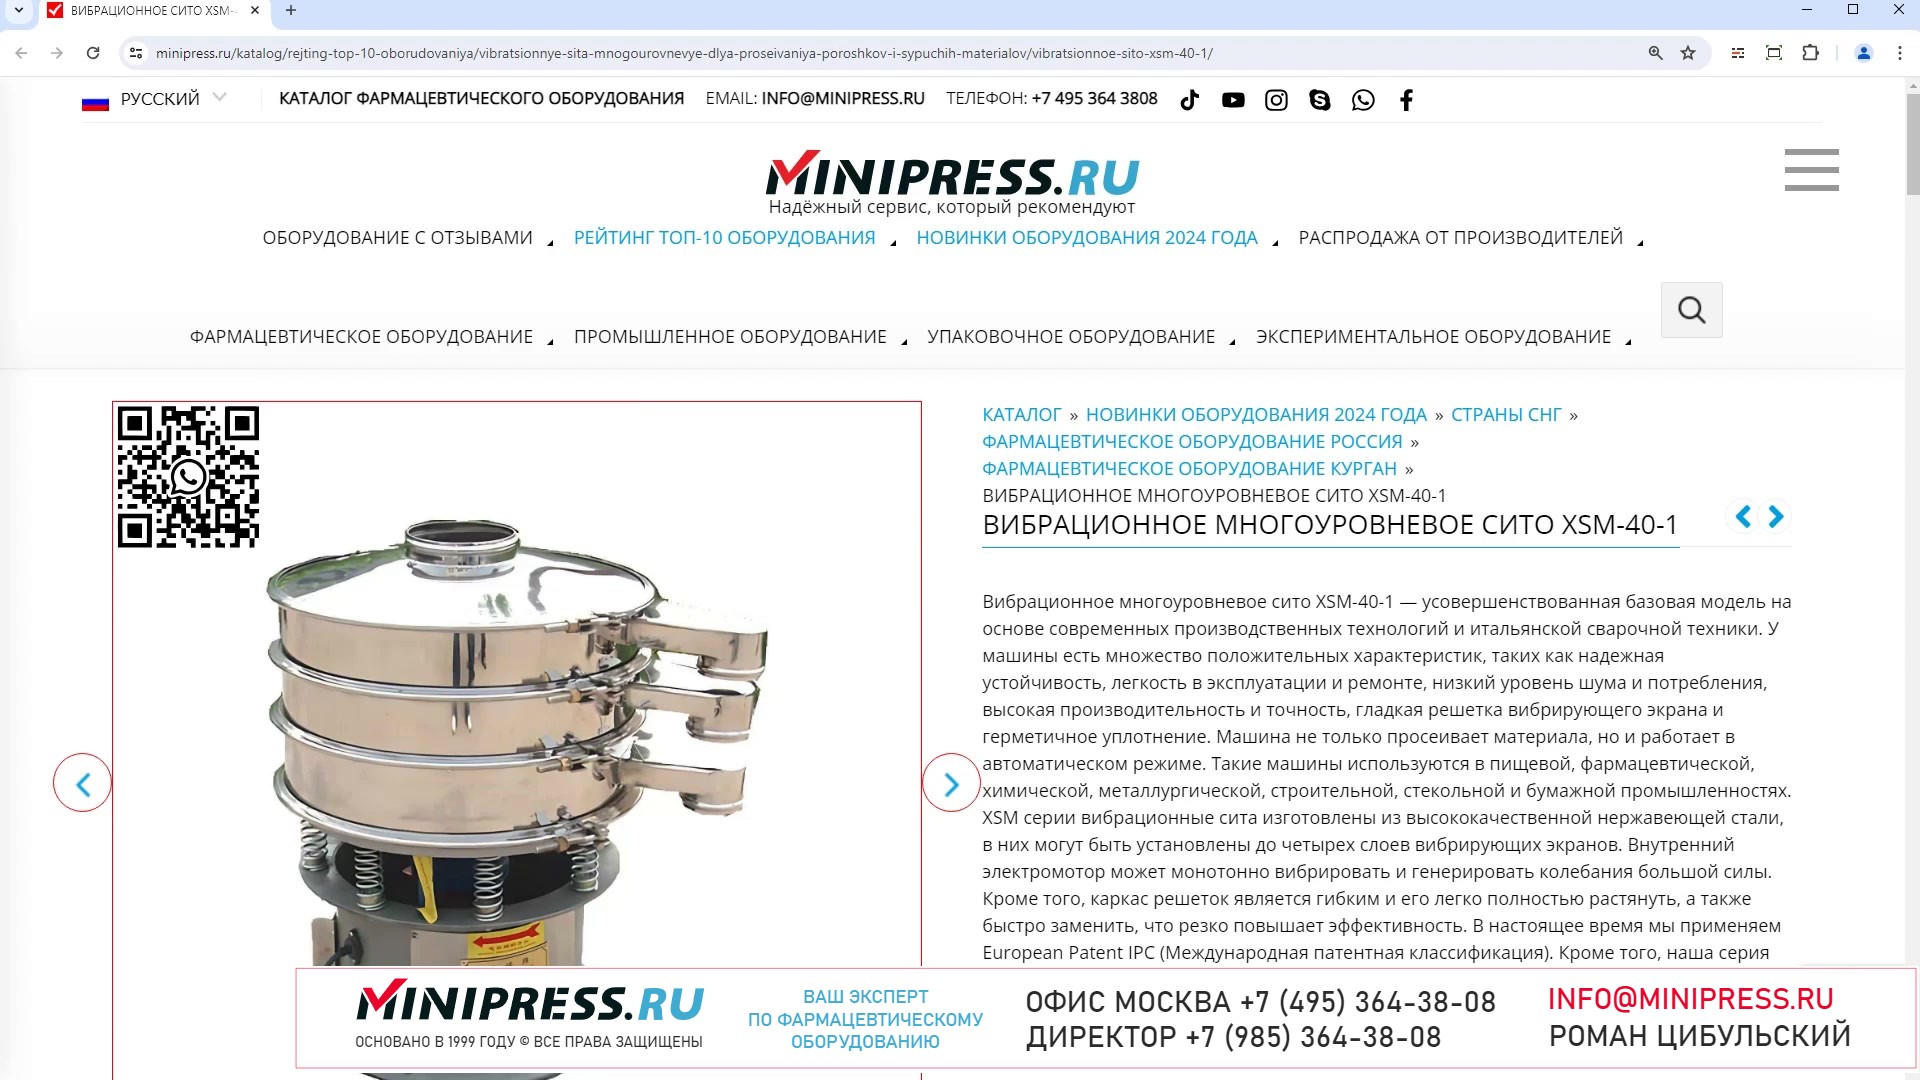 Minipress.ru Вибрационное многоуровневое сито XSM-40-1